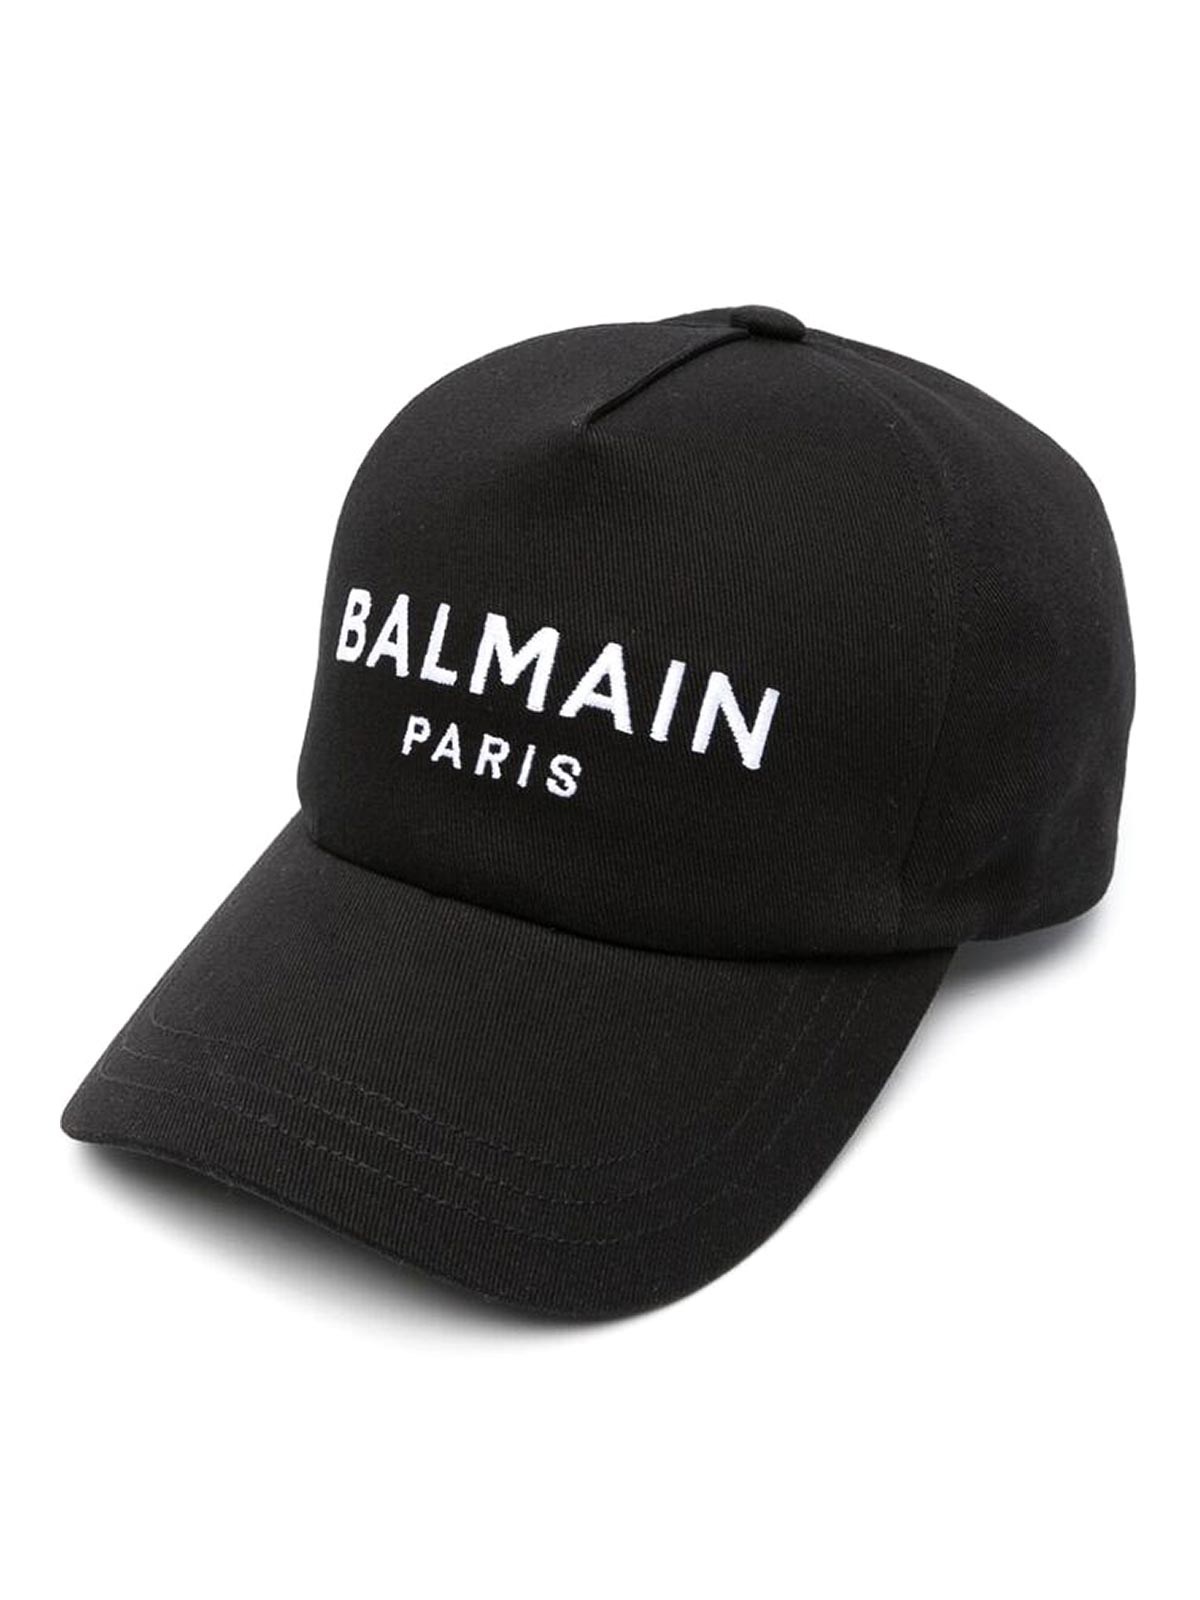 BALMAIN BLACK/WHITE PANELLED CAP